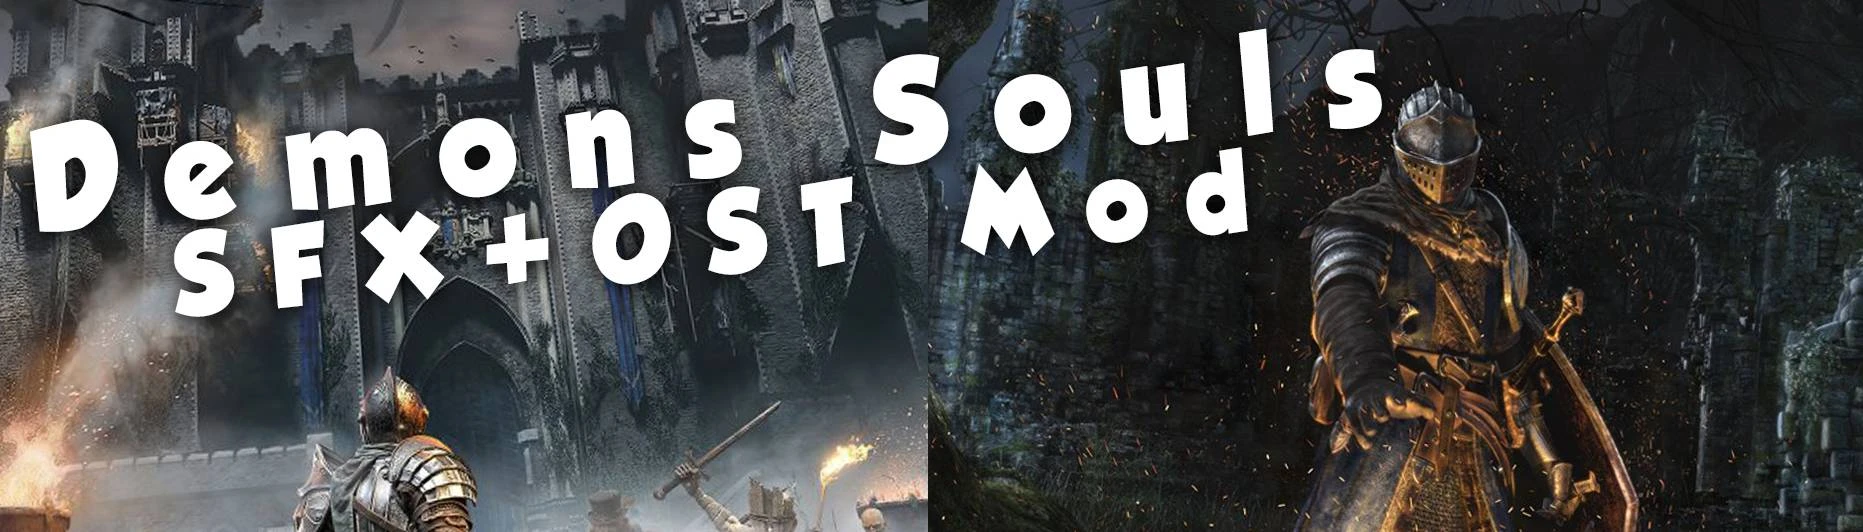 Demon's Souls Original Soundtrack